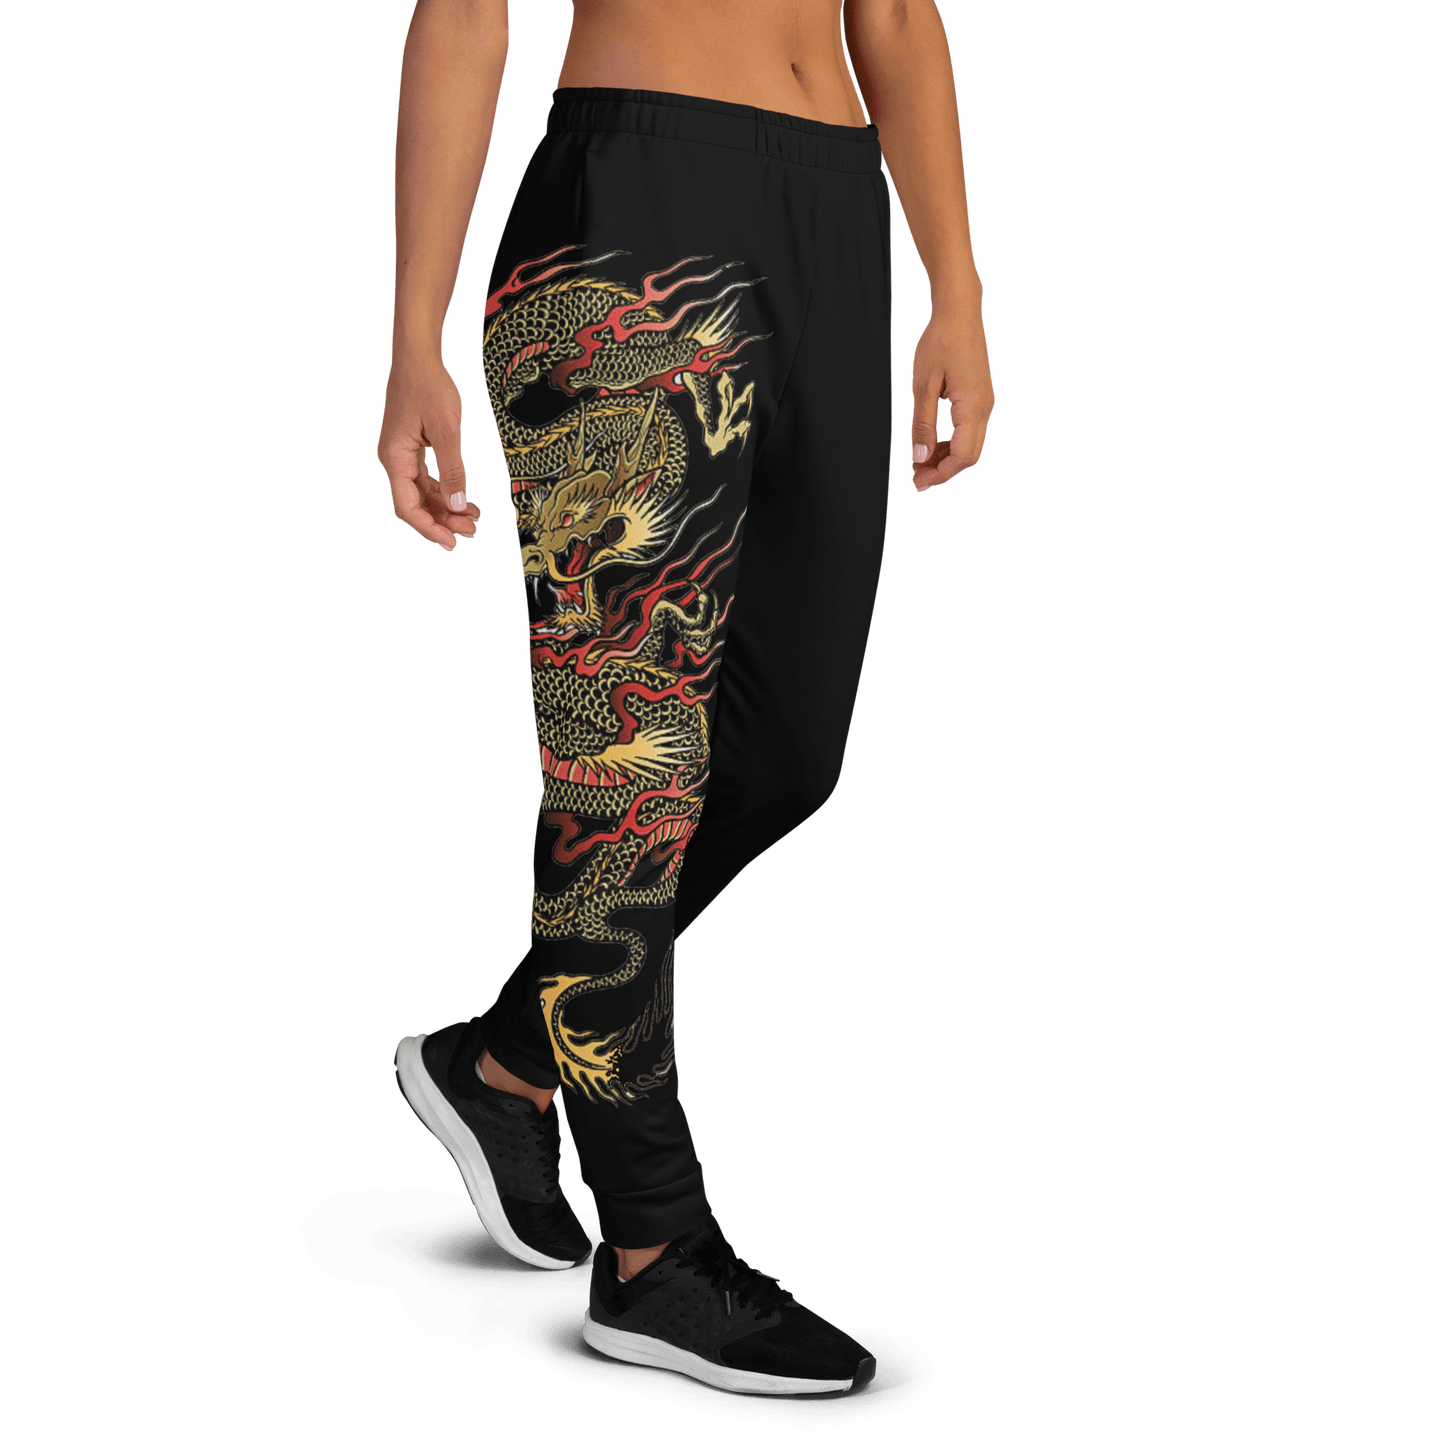 ElysMode Pants Dragon Black Sweatpants